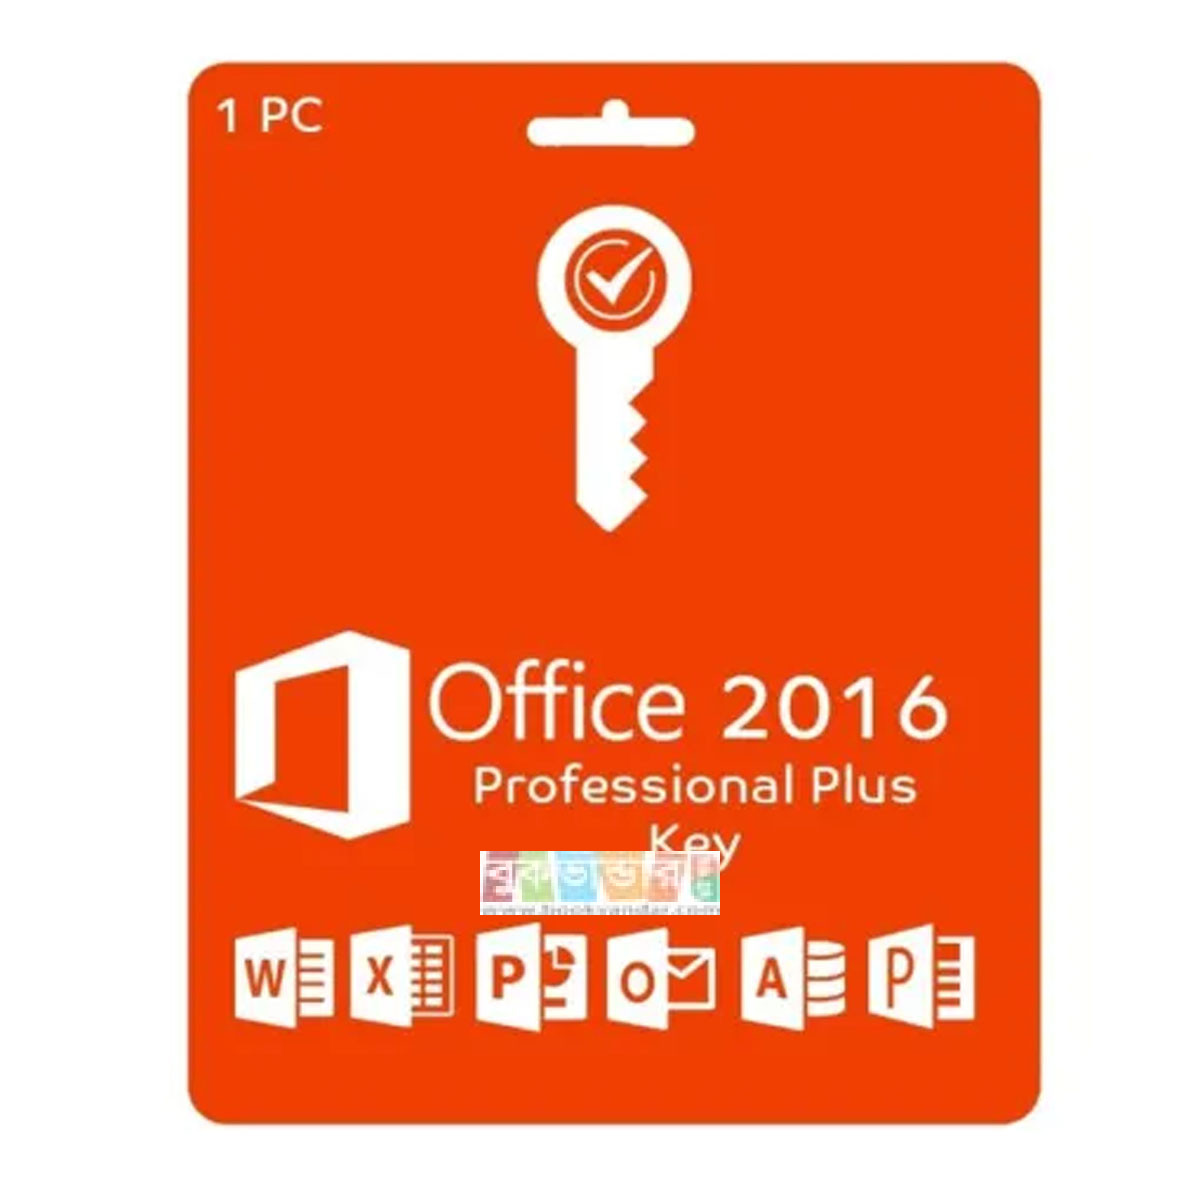 Microsoft Office 2016 Professional Plus Retail Product Key